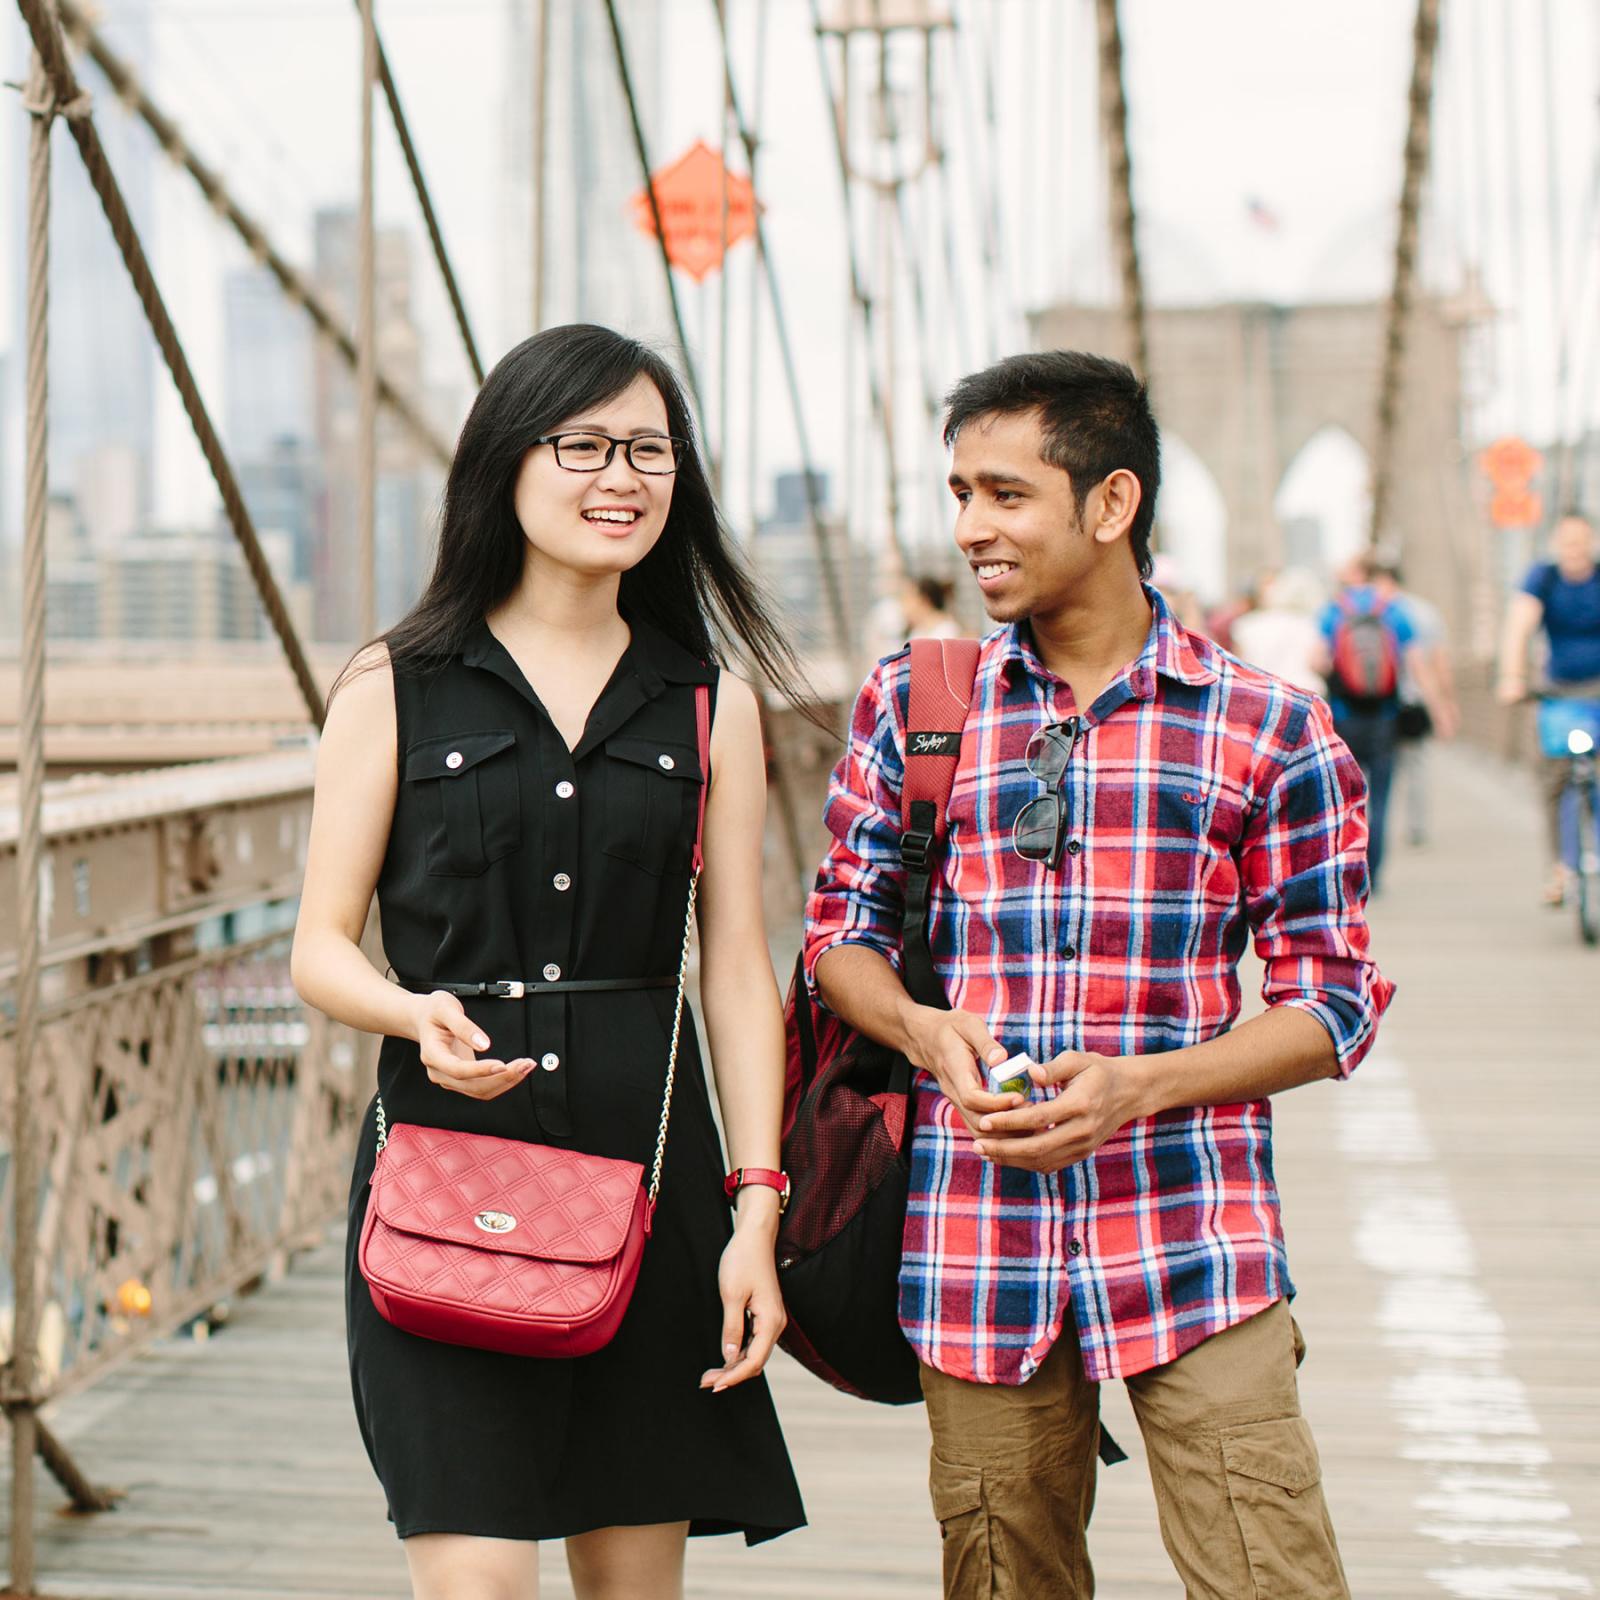 Two Pace University students walking across the Brooklyn Bridge